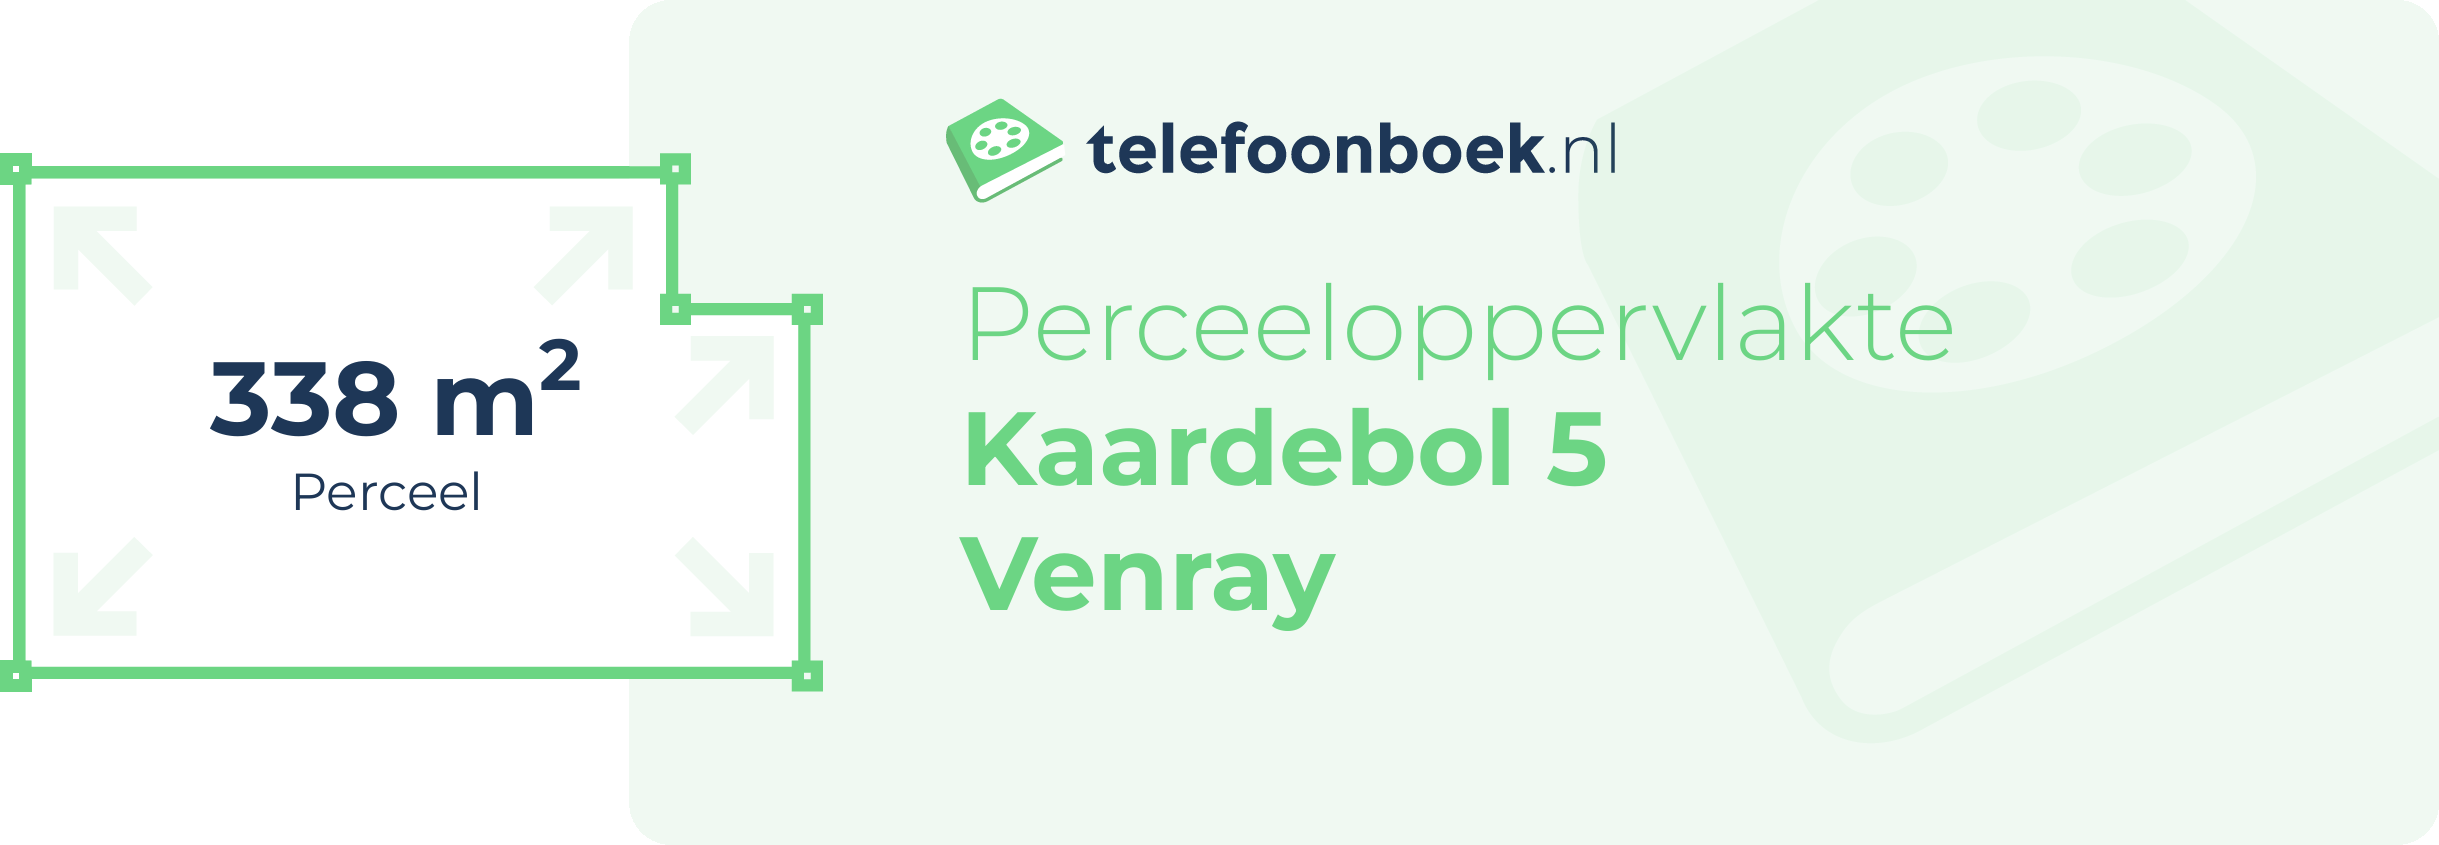 Perceeloppervlakte Kaardebol 5 Venray